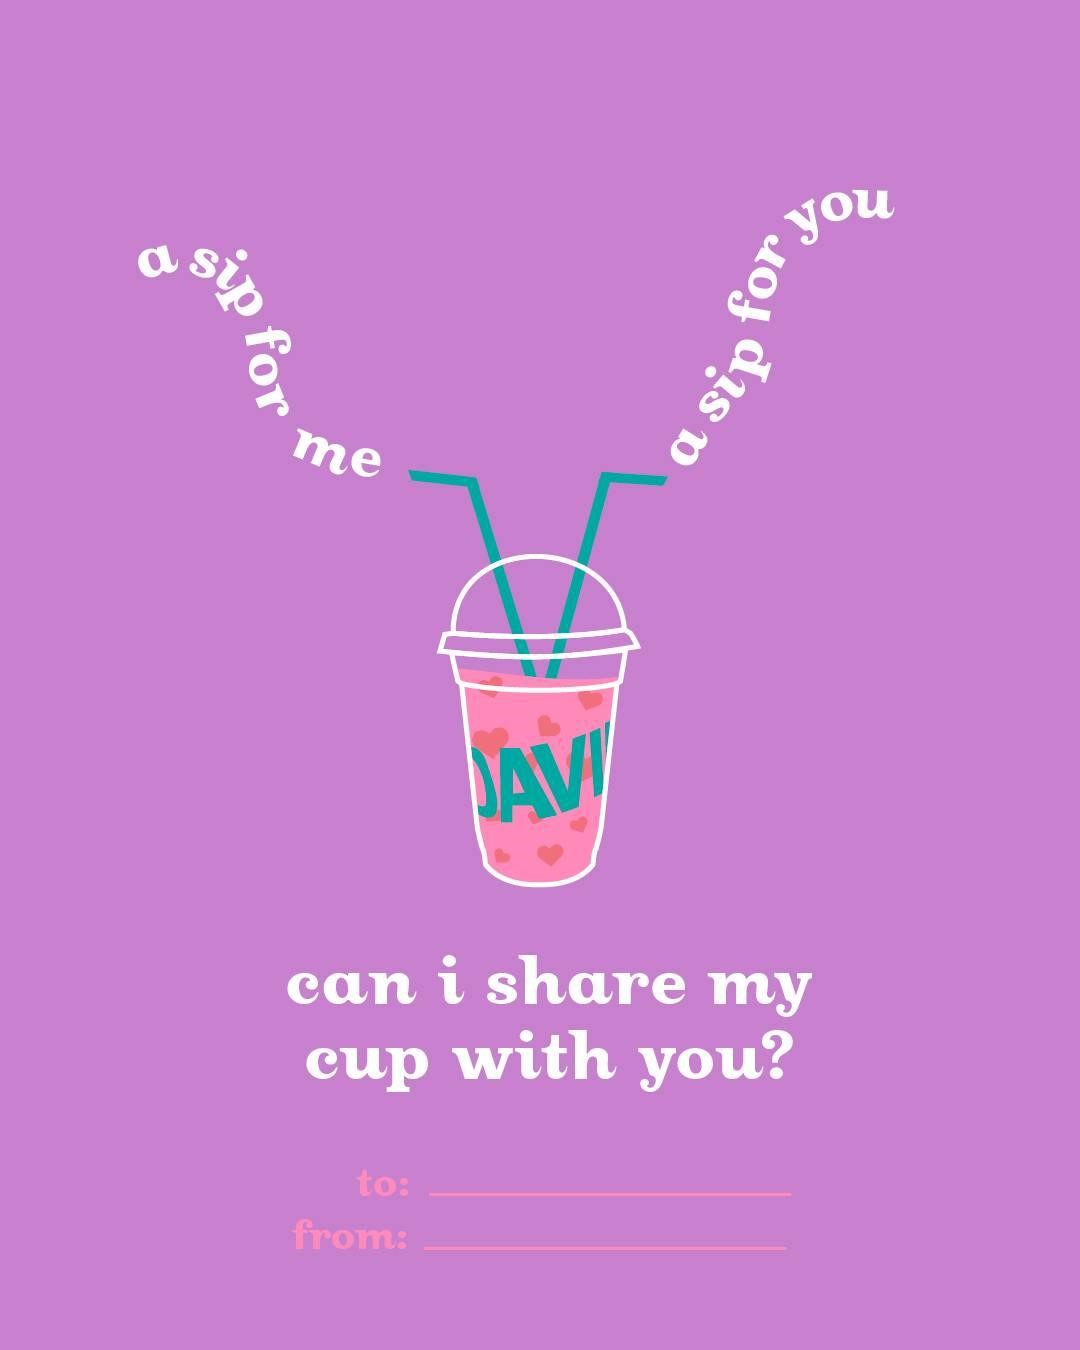 Publication Facebook d’un gobelet de thé avec deux pailles écrit « A sip for me, a sip for you, can I share my cup with you? To : From :